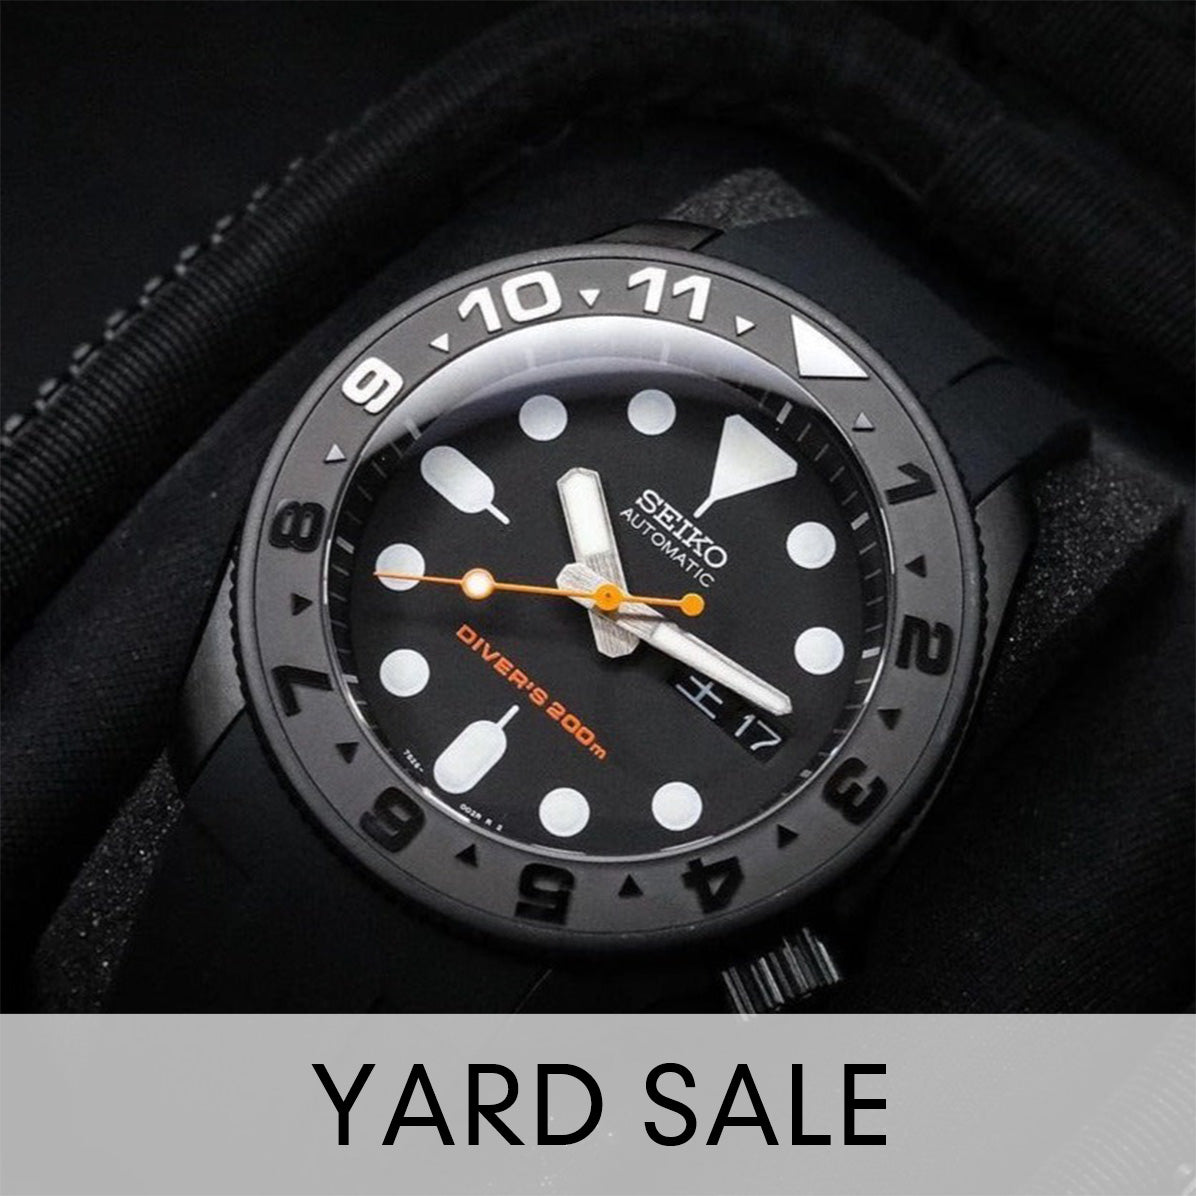 YARD SALE - Ceramic Insert - 007 Yacht Master Dual Time Black